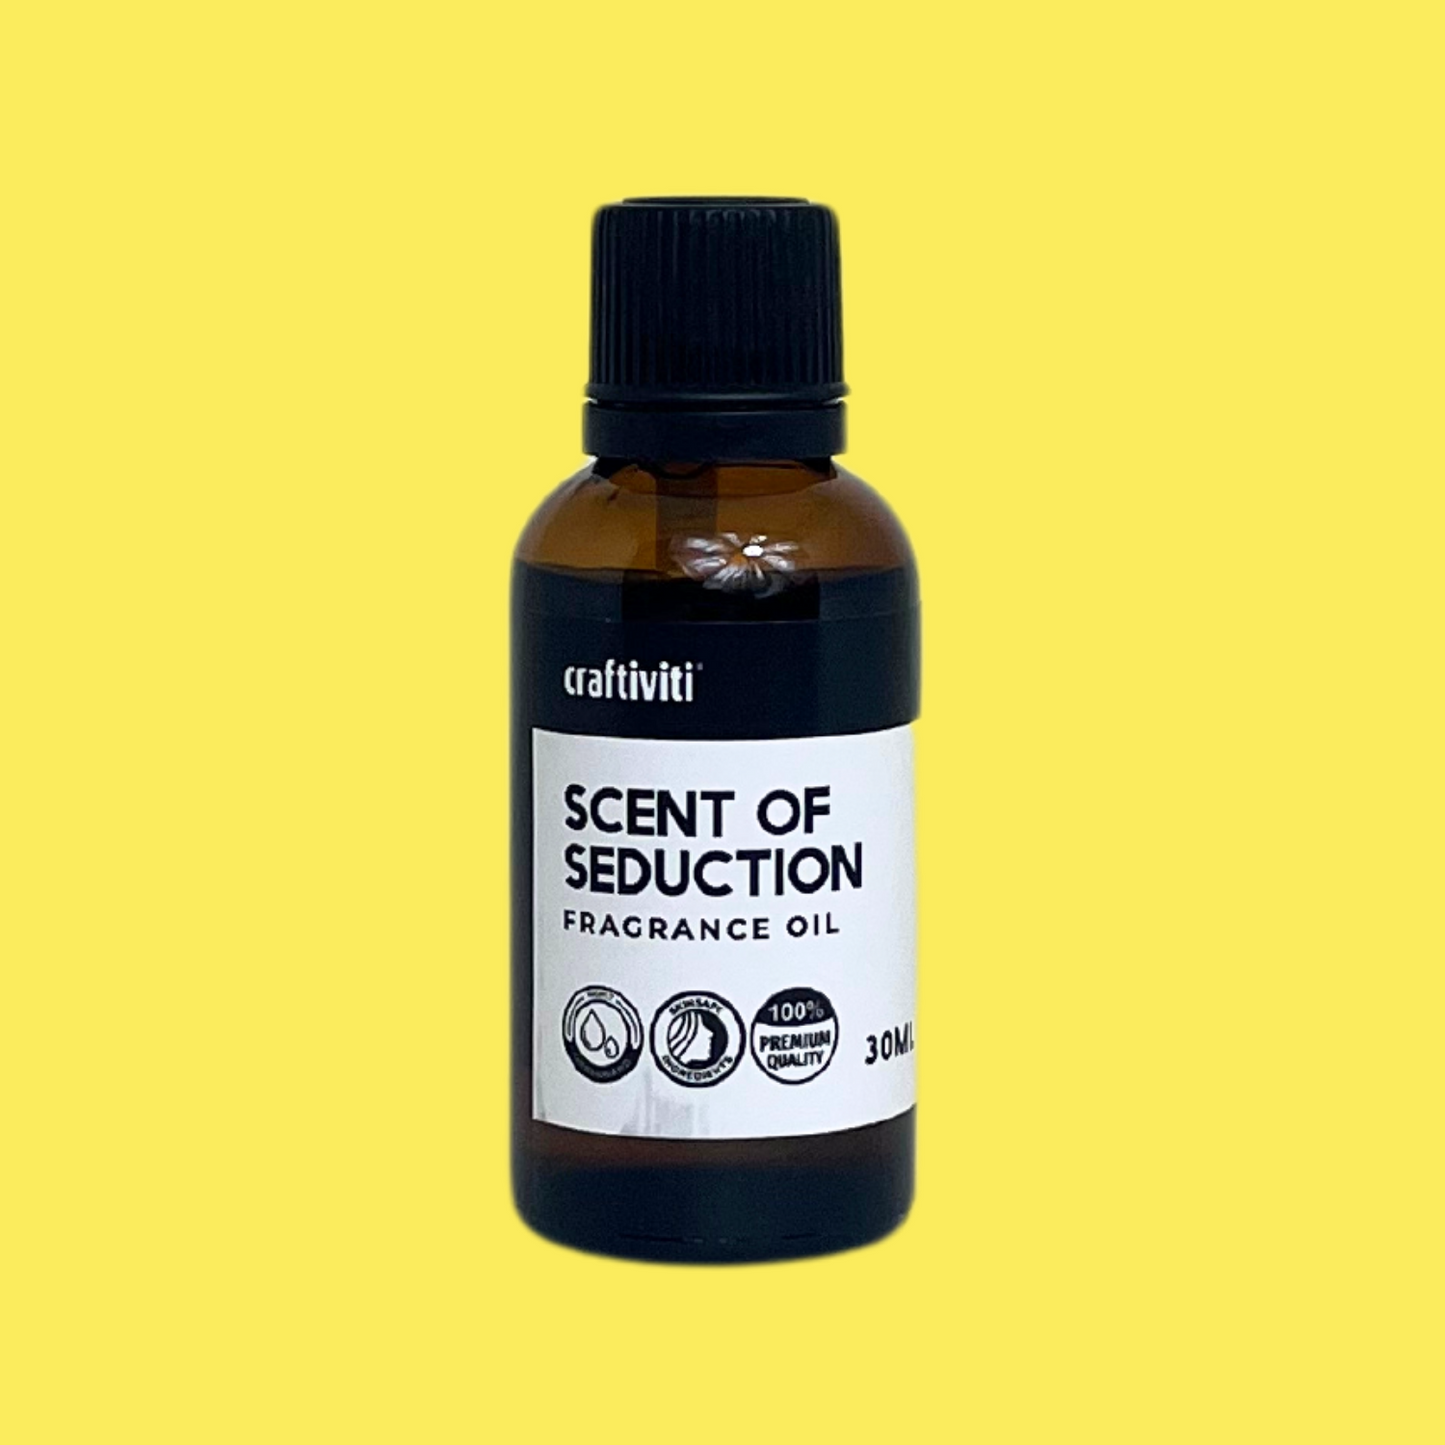 Scent of Seduction Fragrance Oil